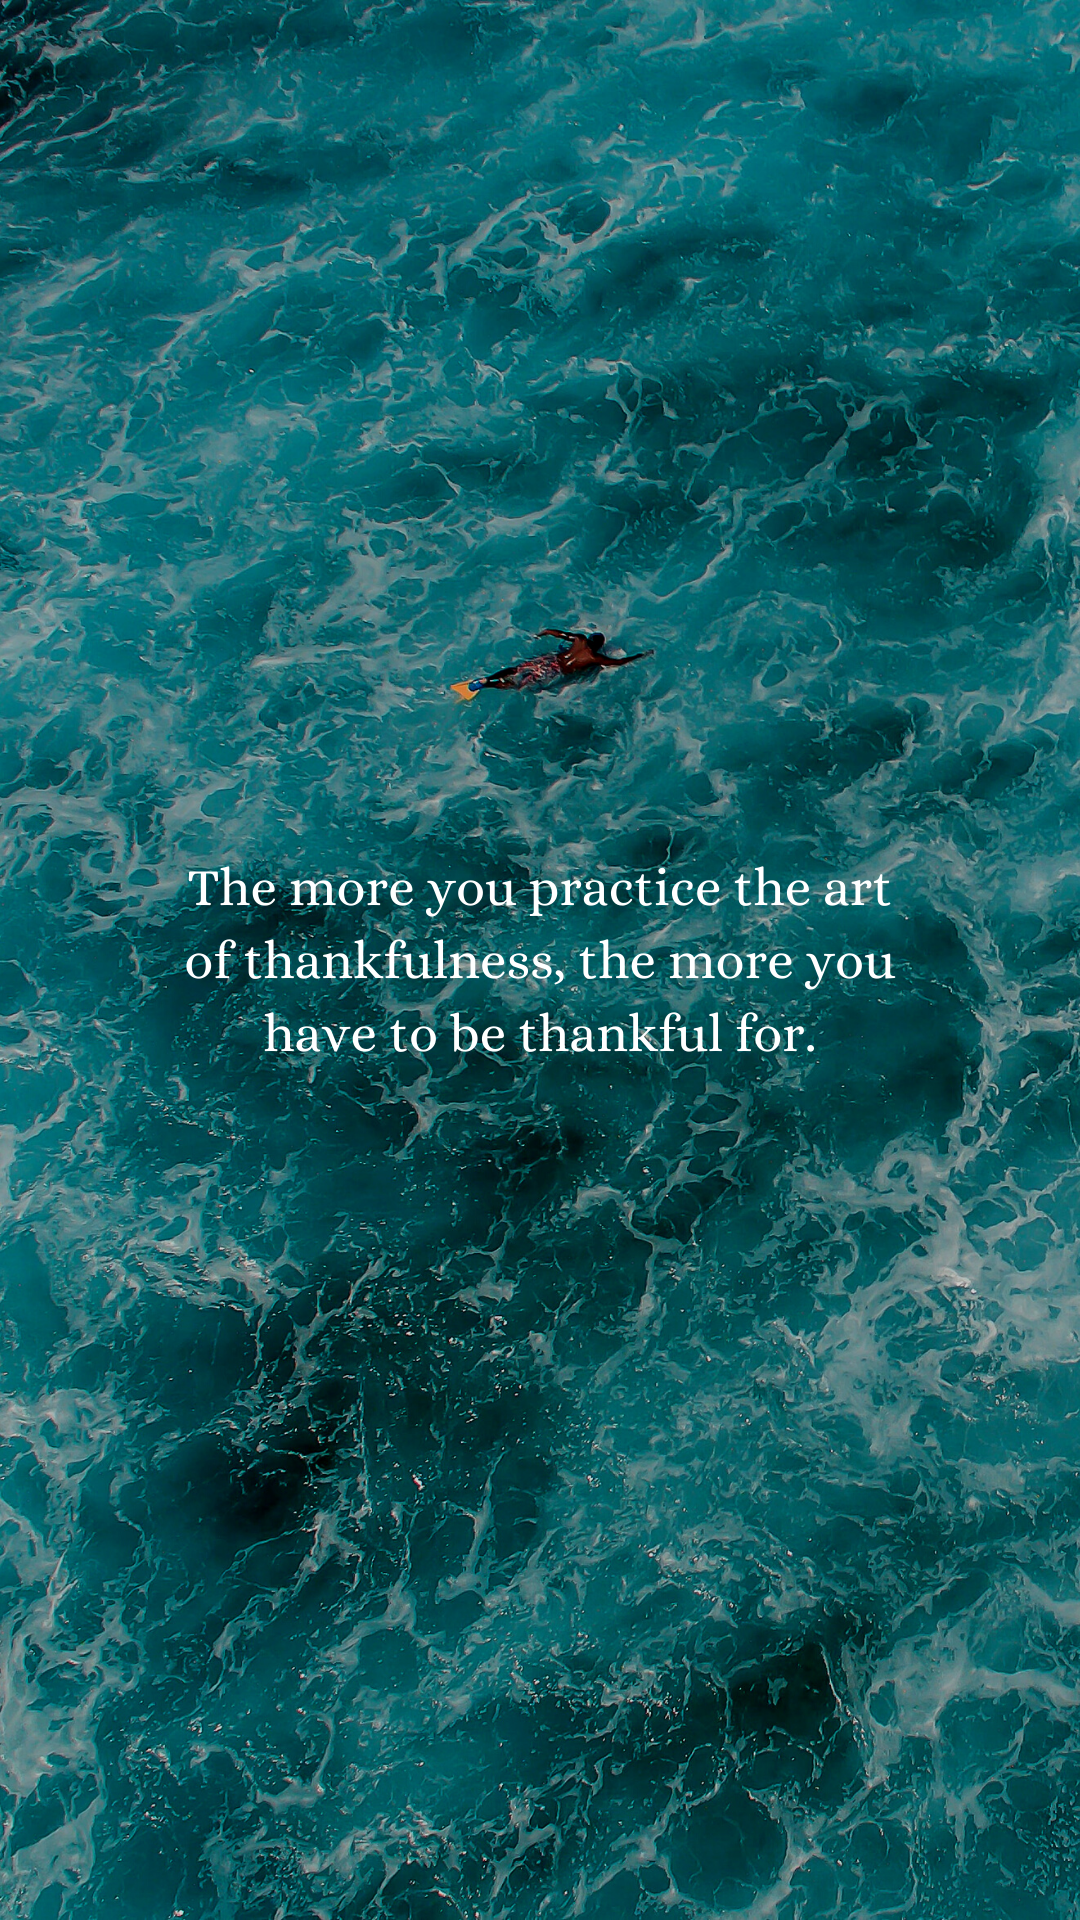 Practice the art of thankfulness